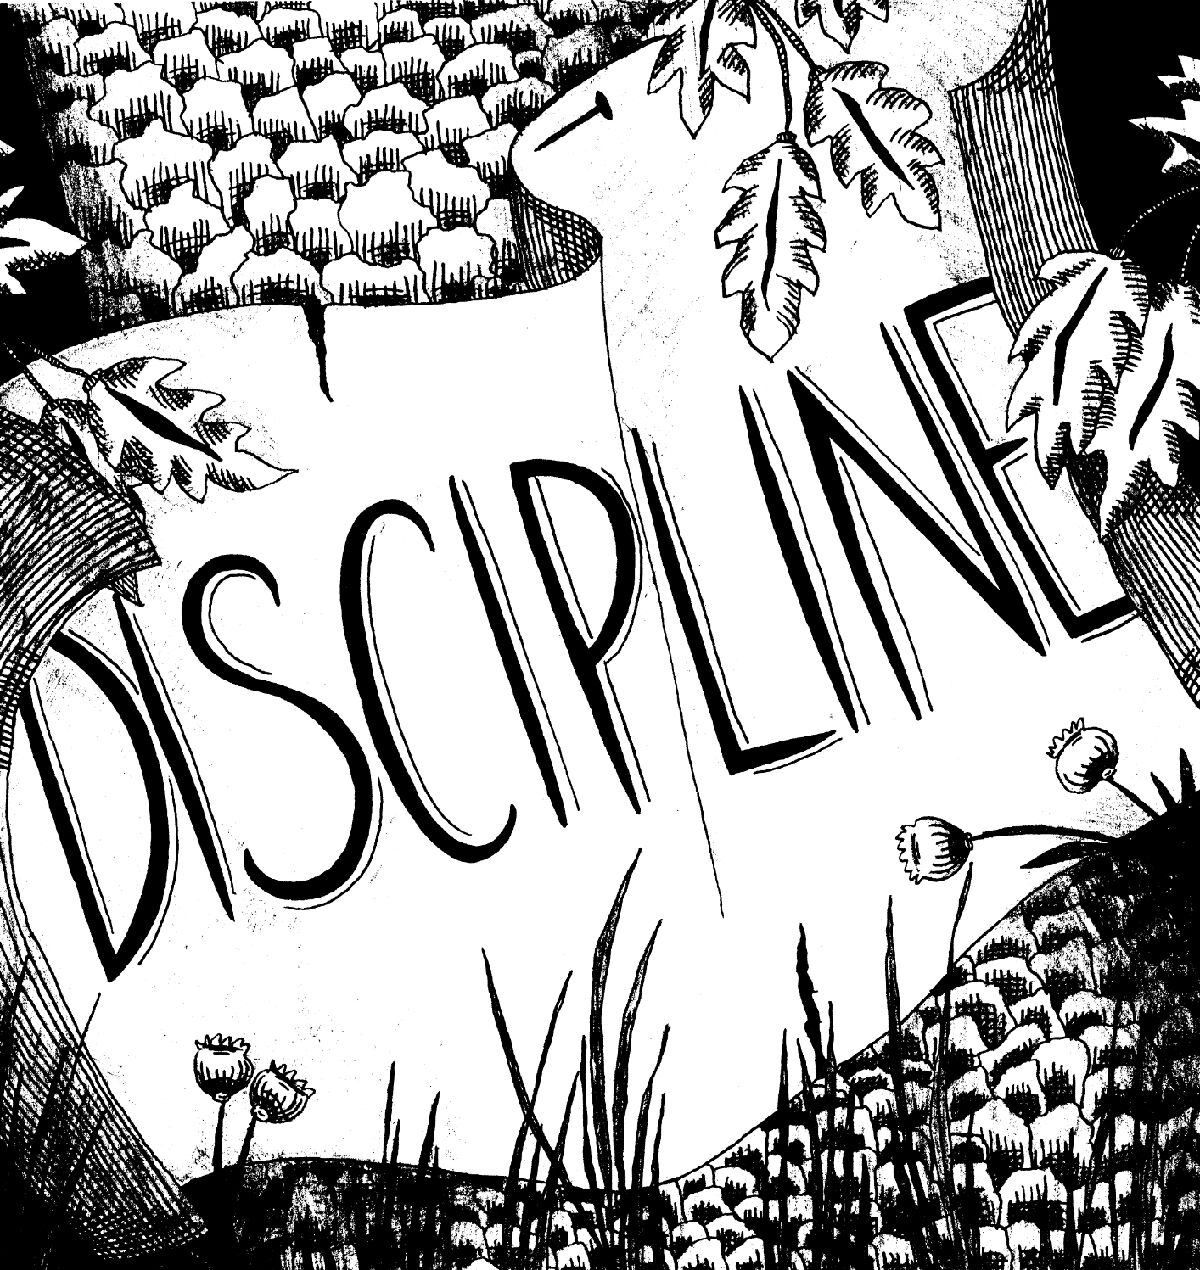 Essay on discipline in my life